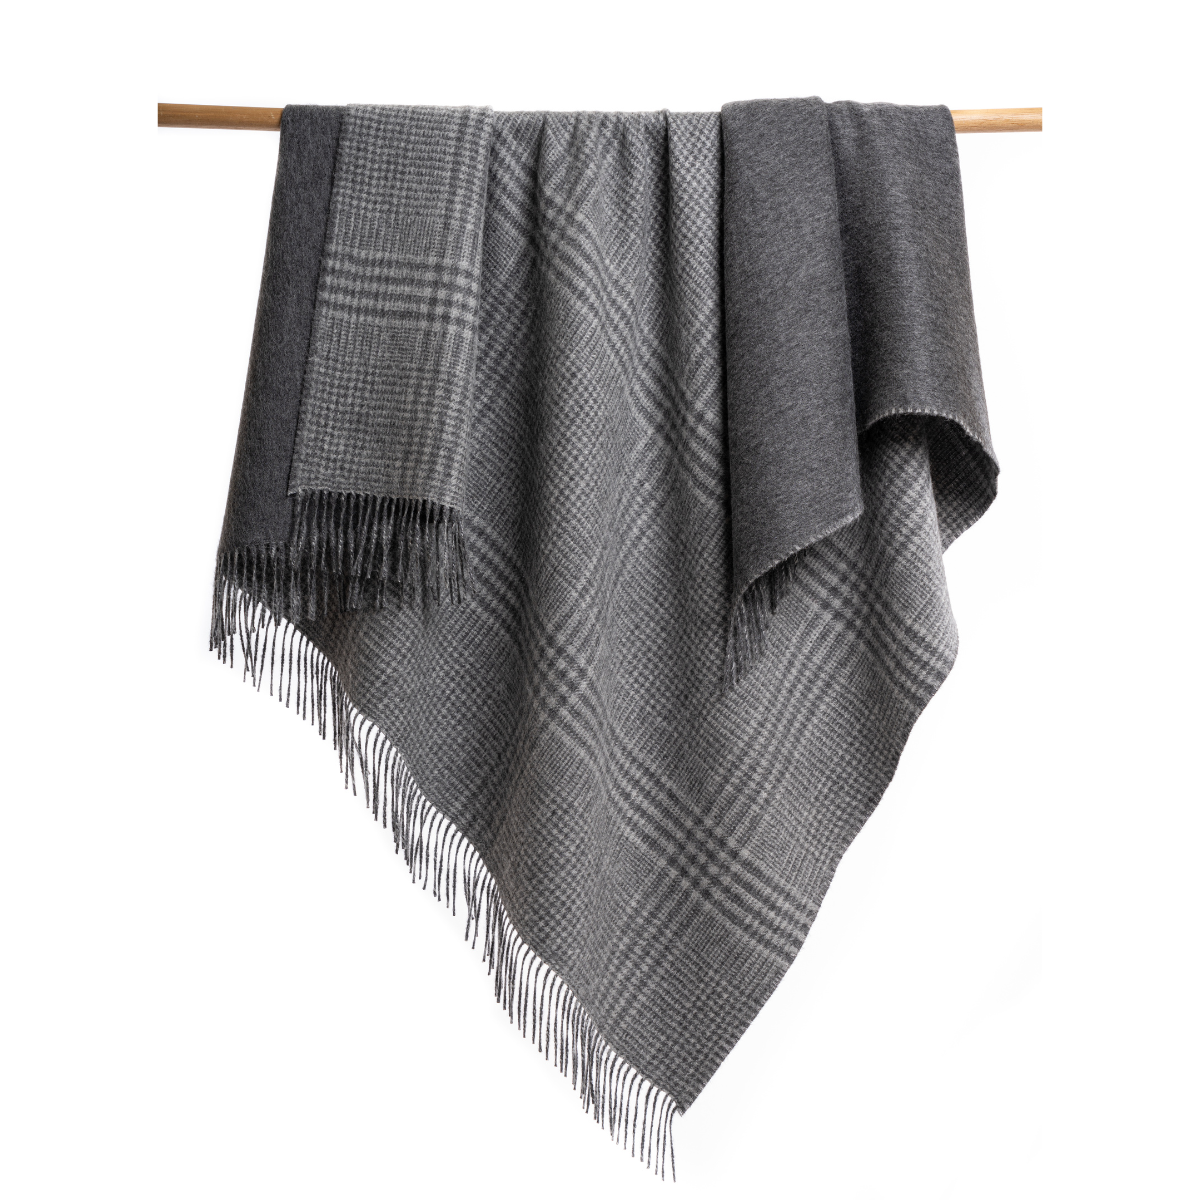 An Alpacas of Montana soft cozy luxury warm dark charcoal gray plaid blanket with a tasseled edge.